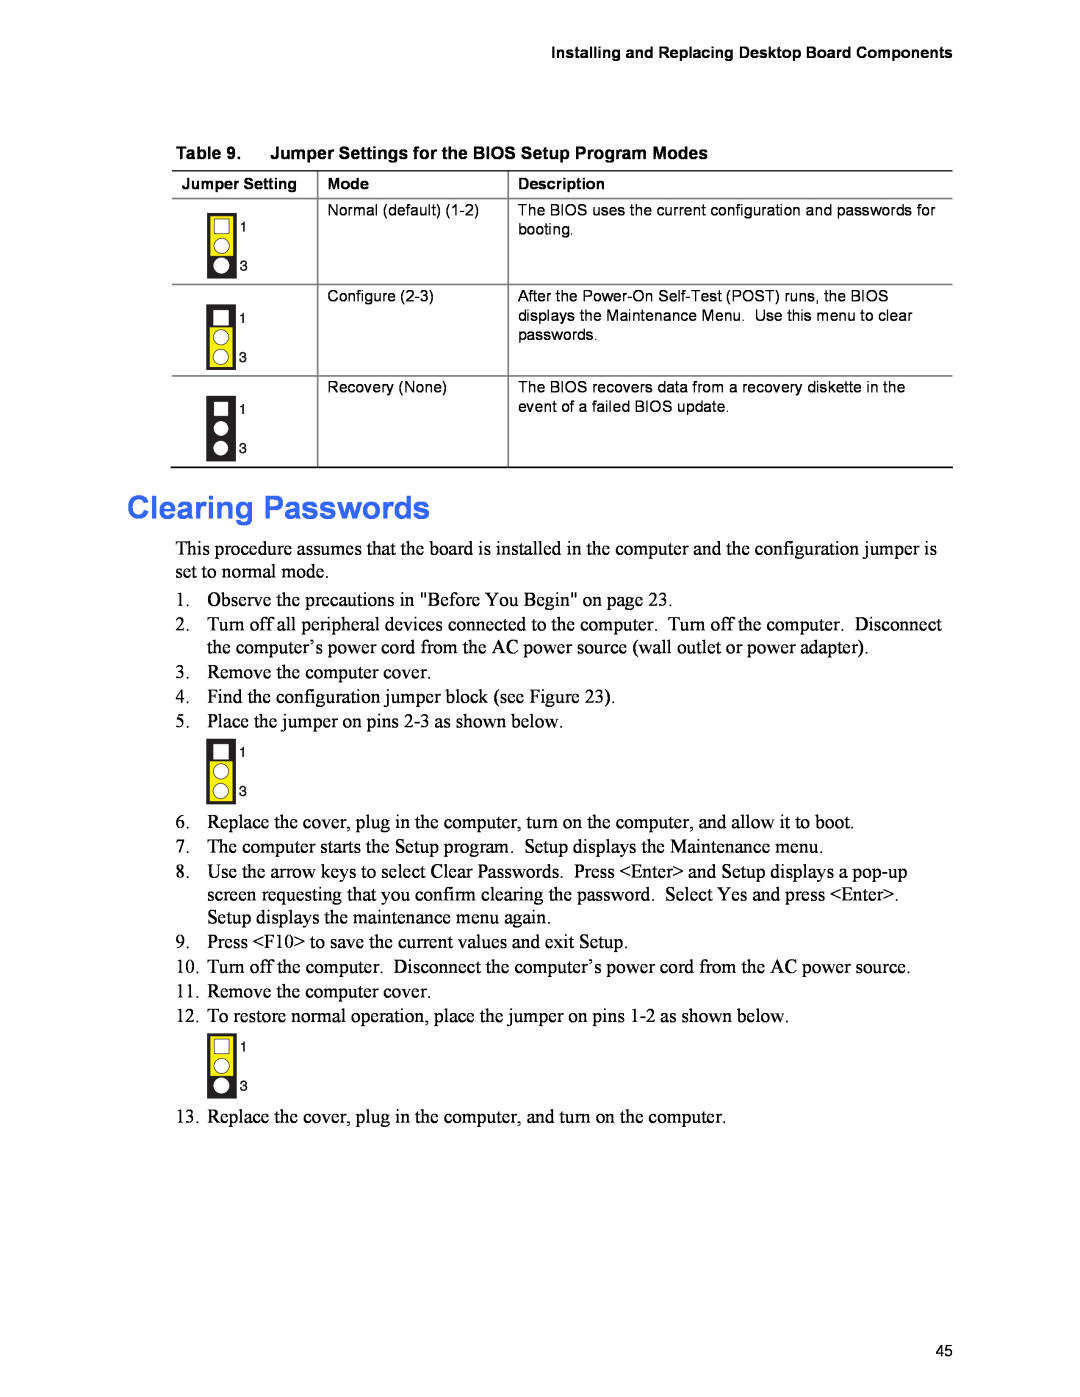 Intel D101GGC manual Clearing Passwords 